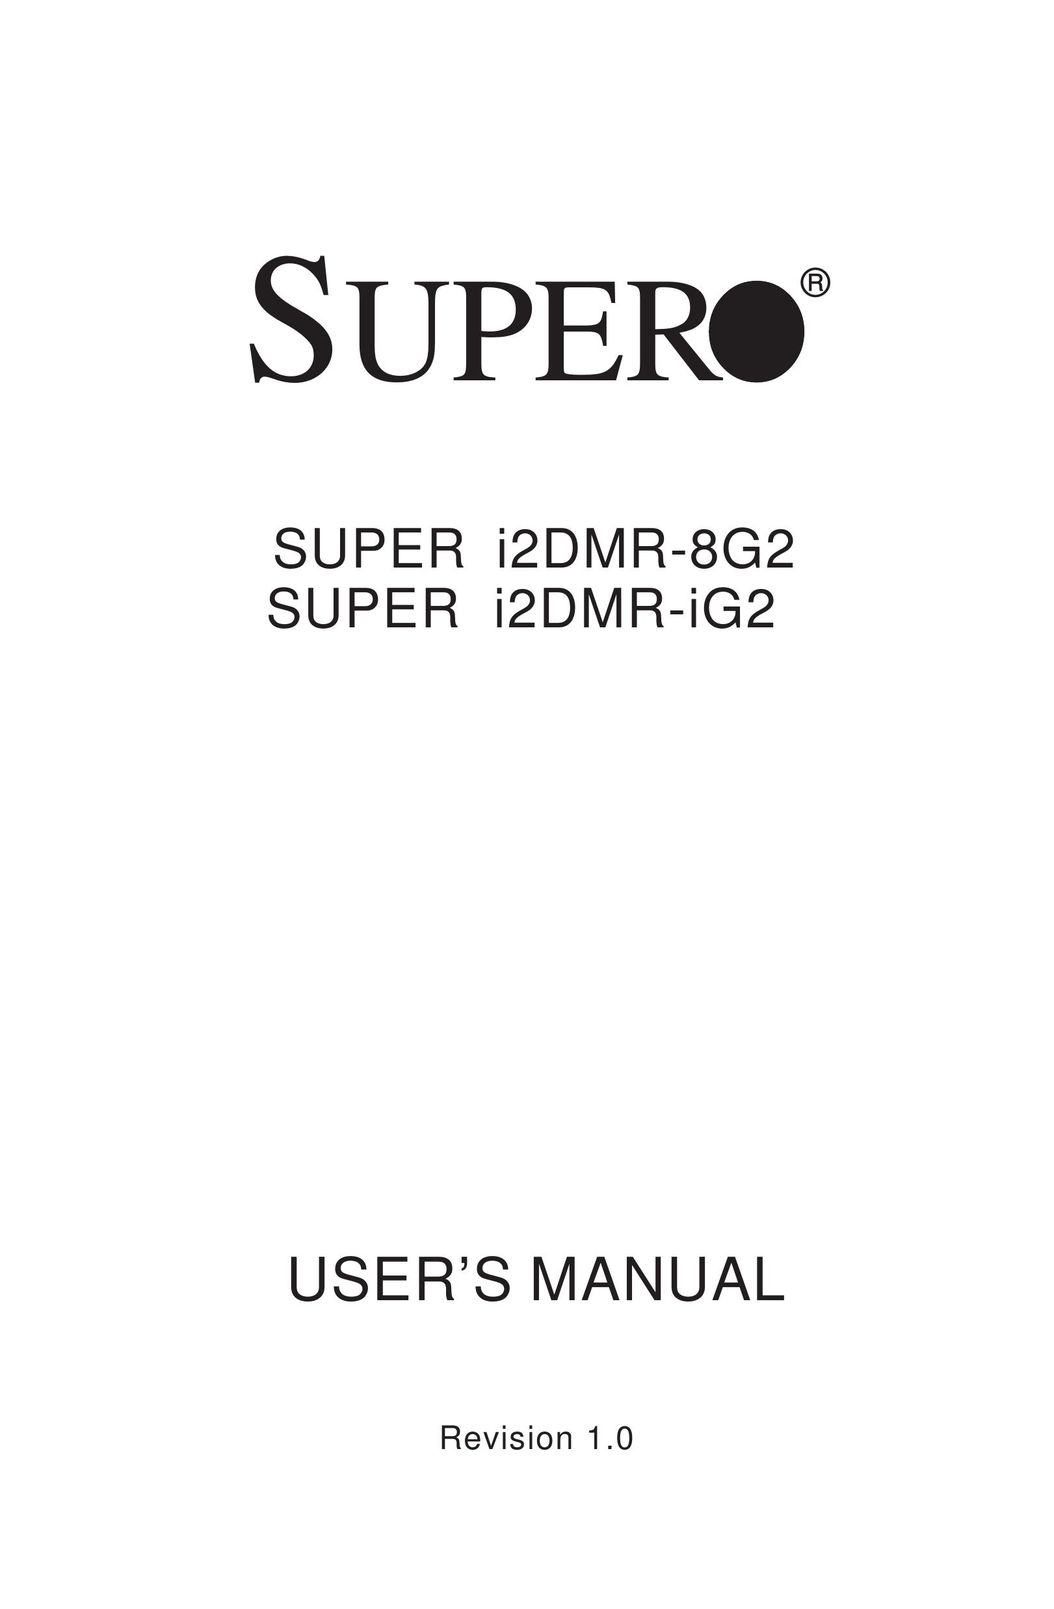 SUPER MICRO Computer I2DMR-8G2 Computer Hardware User Manual